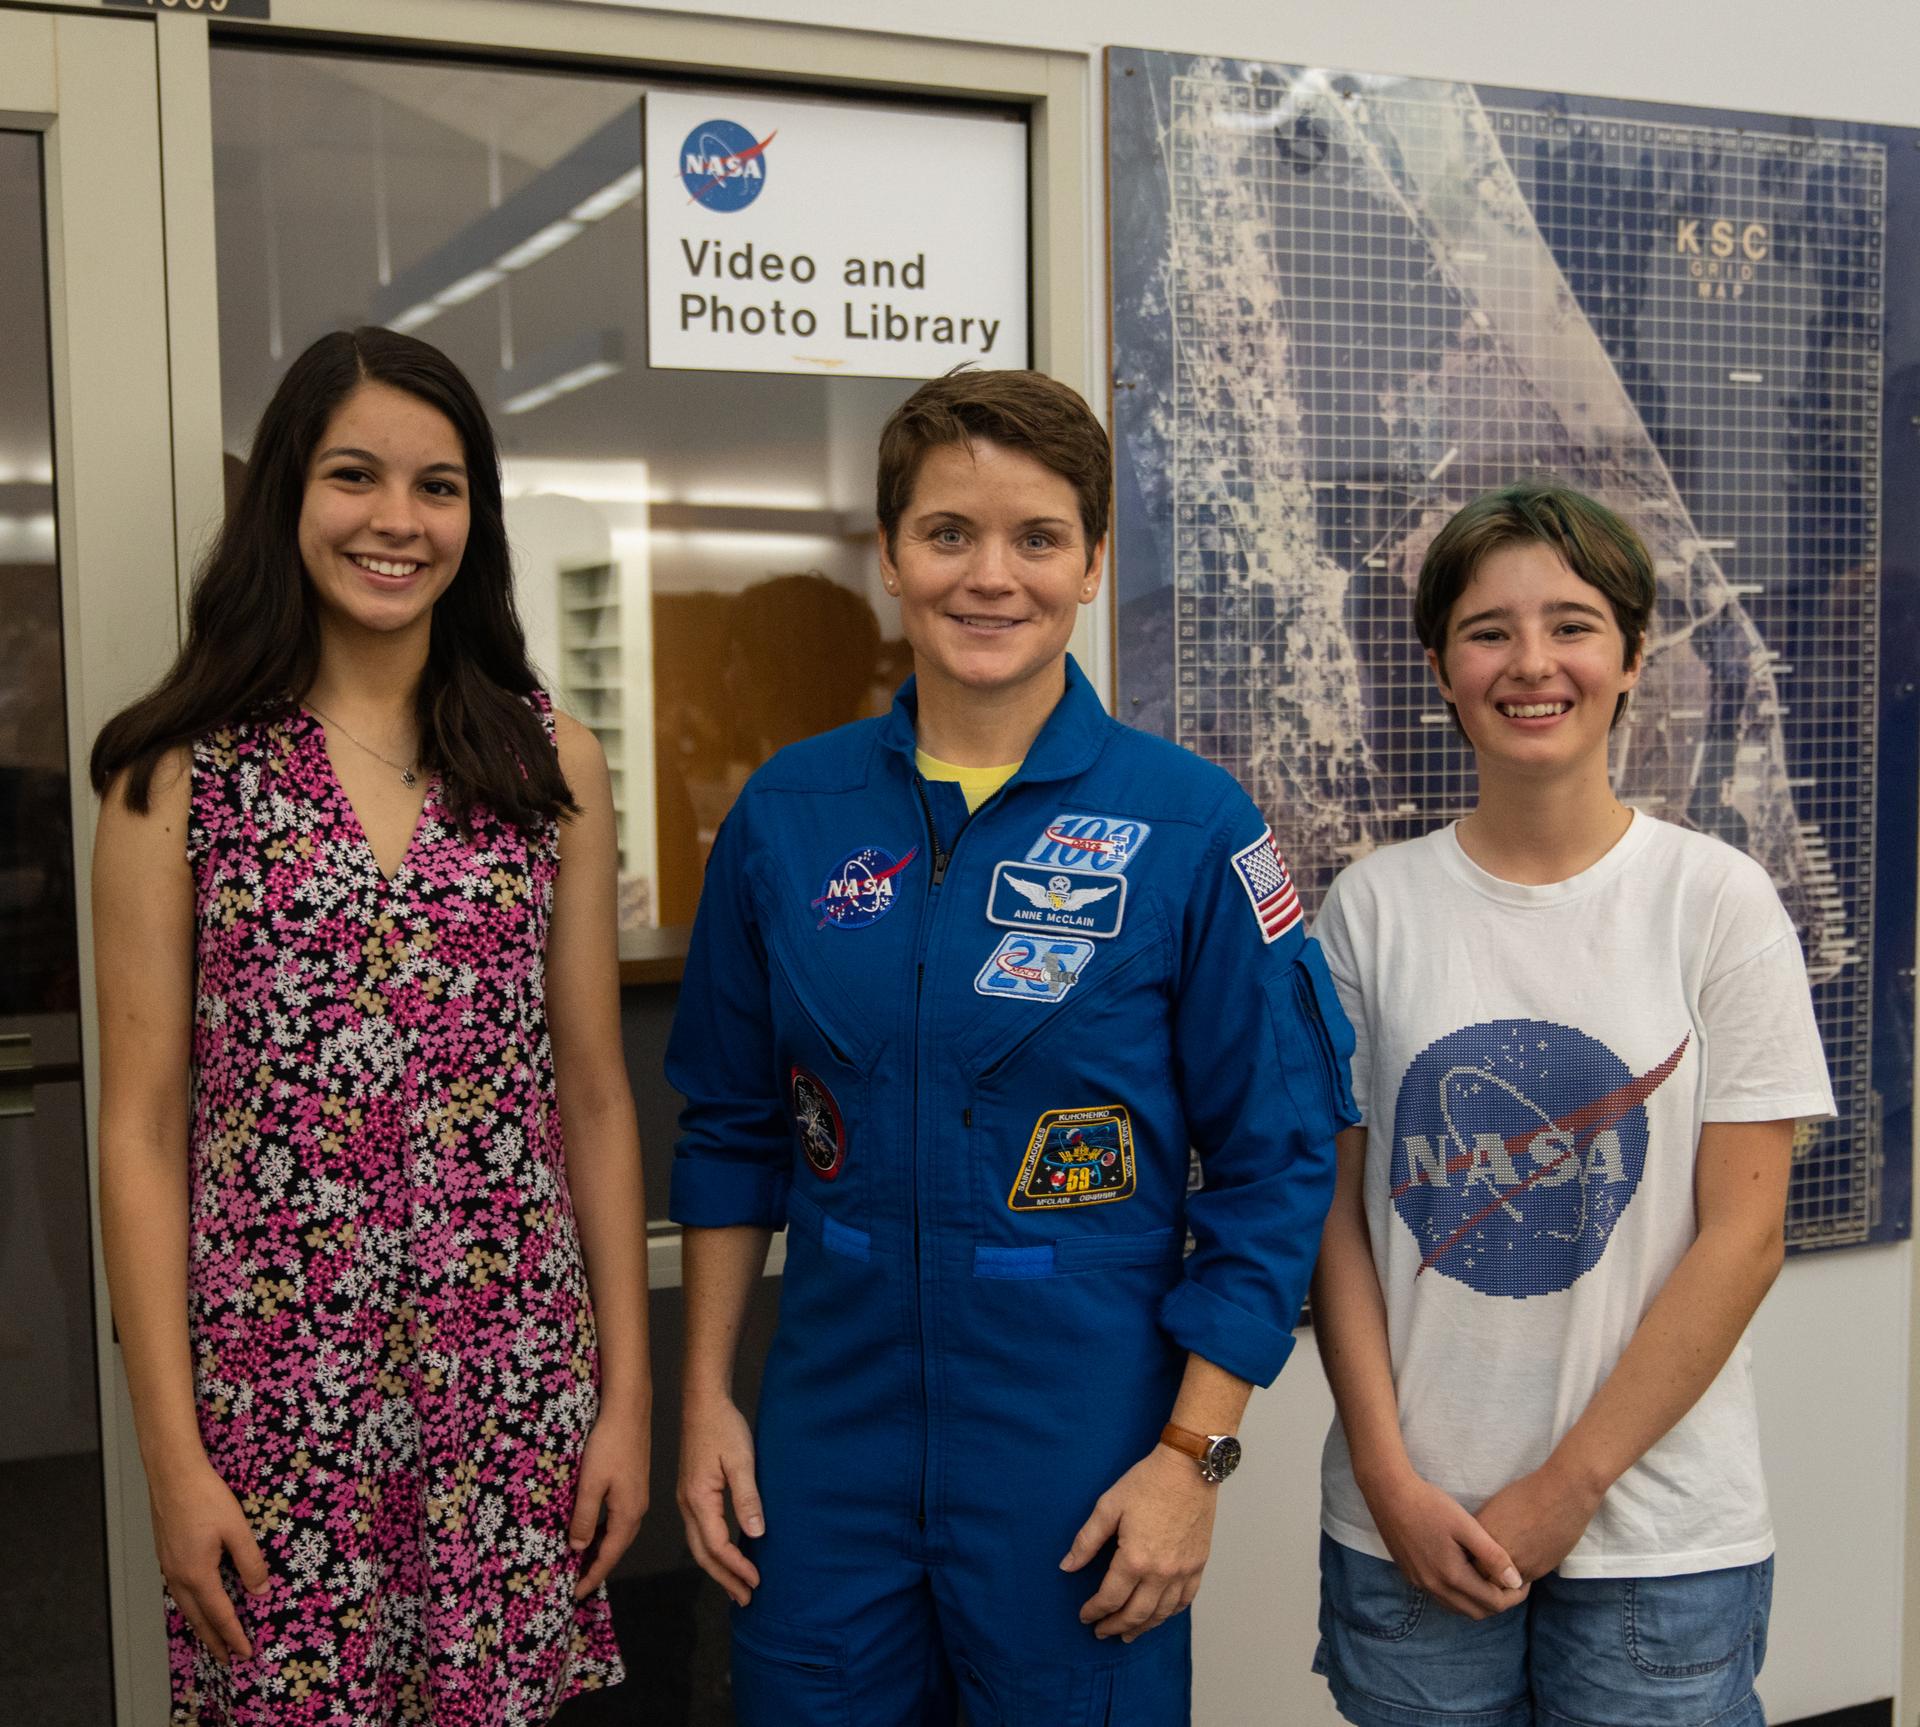 Student essay winners Amanda Gutierrez, left, and Taia Saurer pose with NASA astronaut Anne McClain